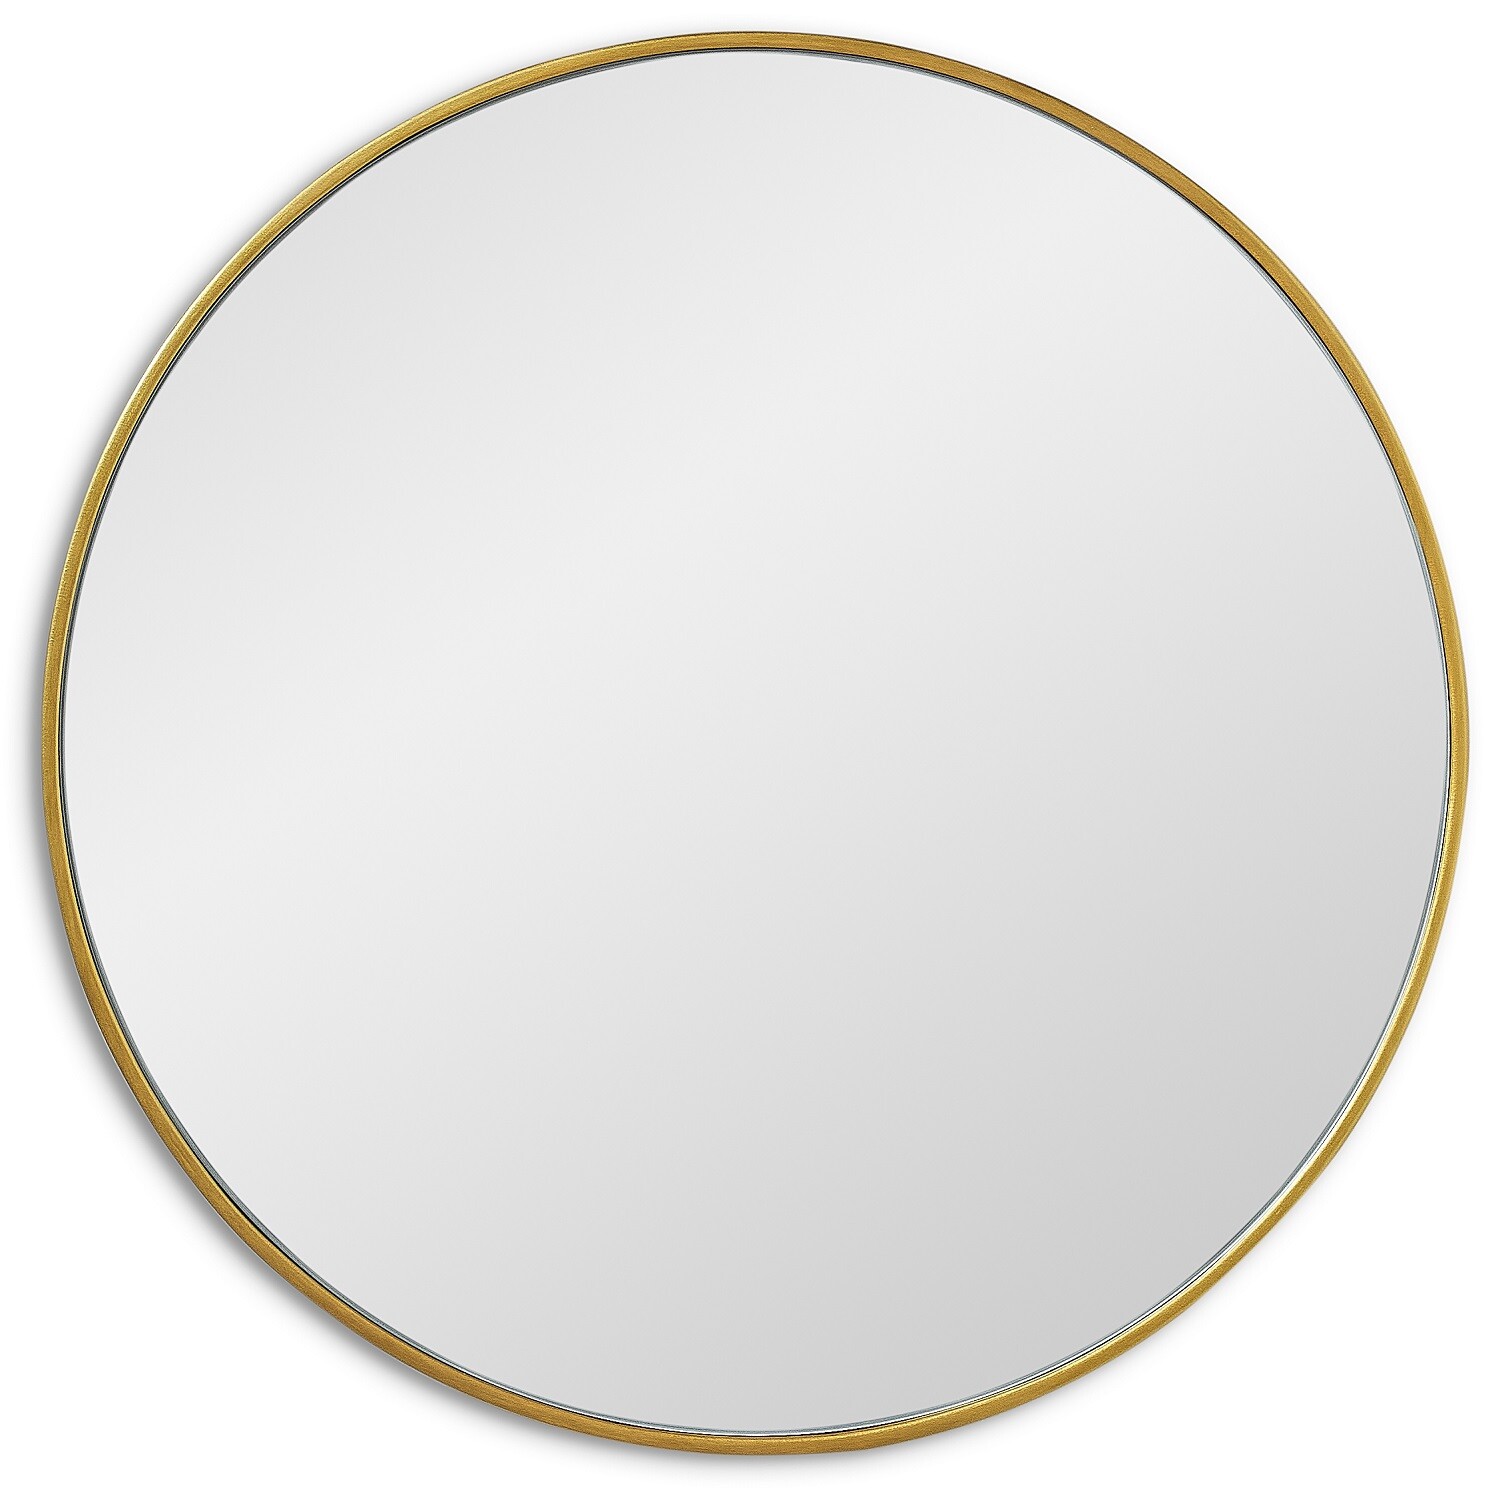 Круглое зеркало в тонкой раме 70 см золото Ala M Gold Smal